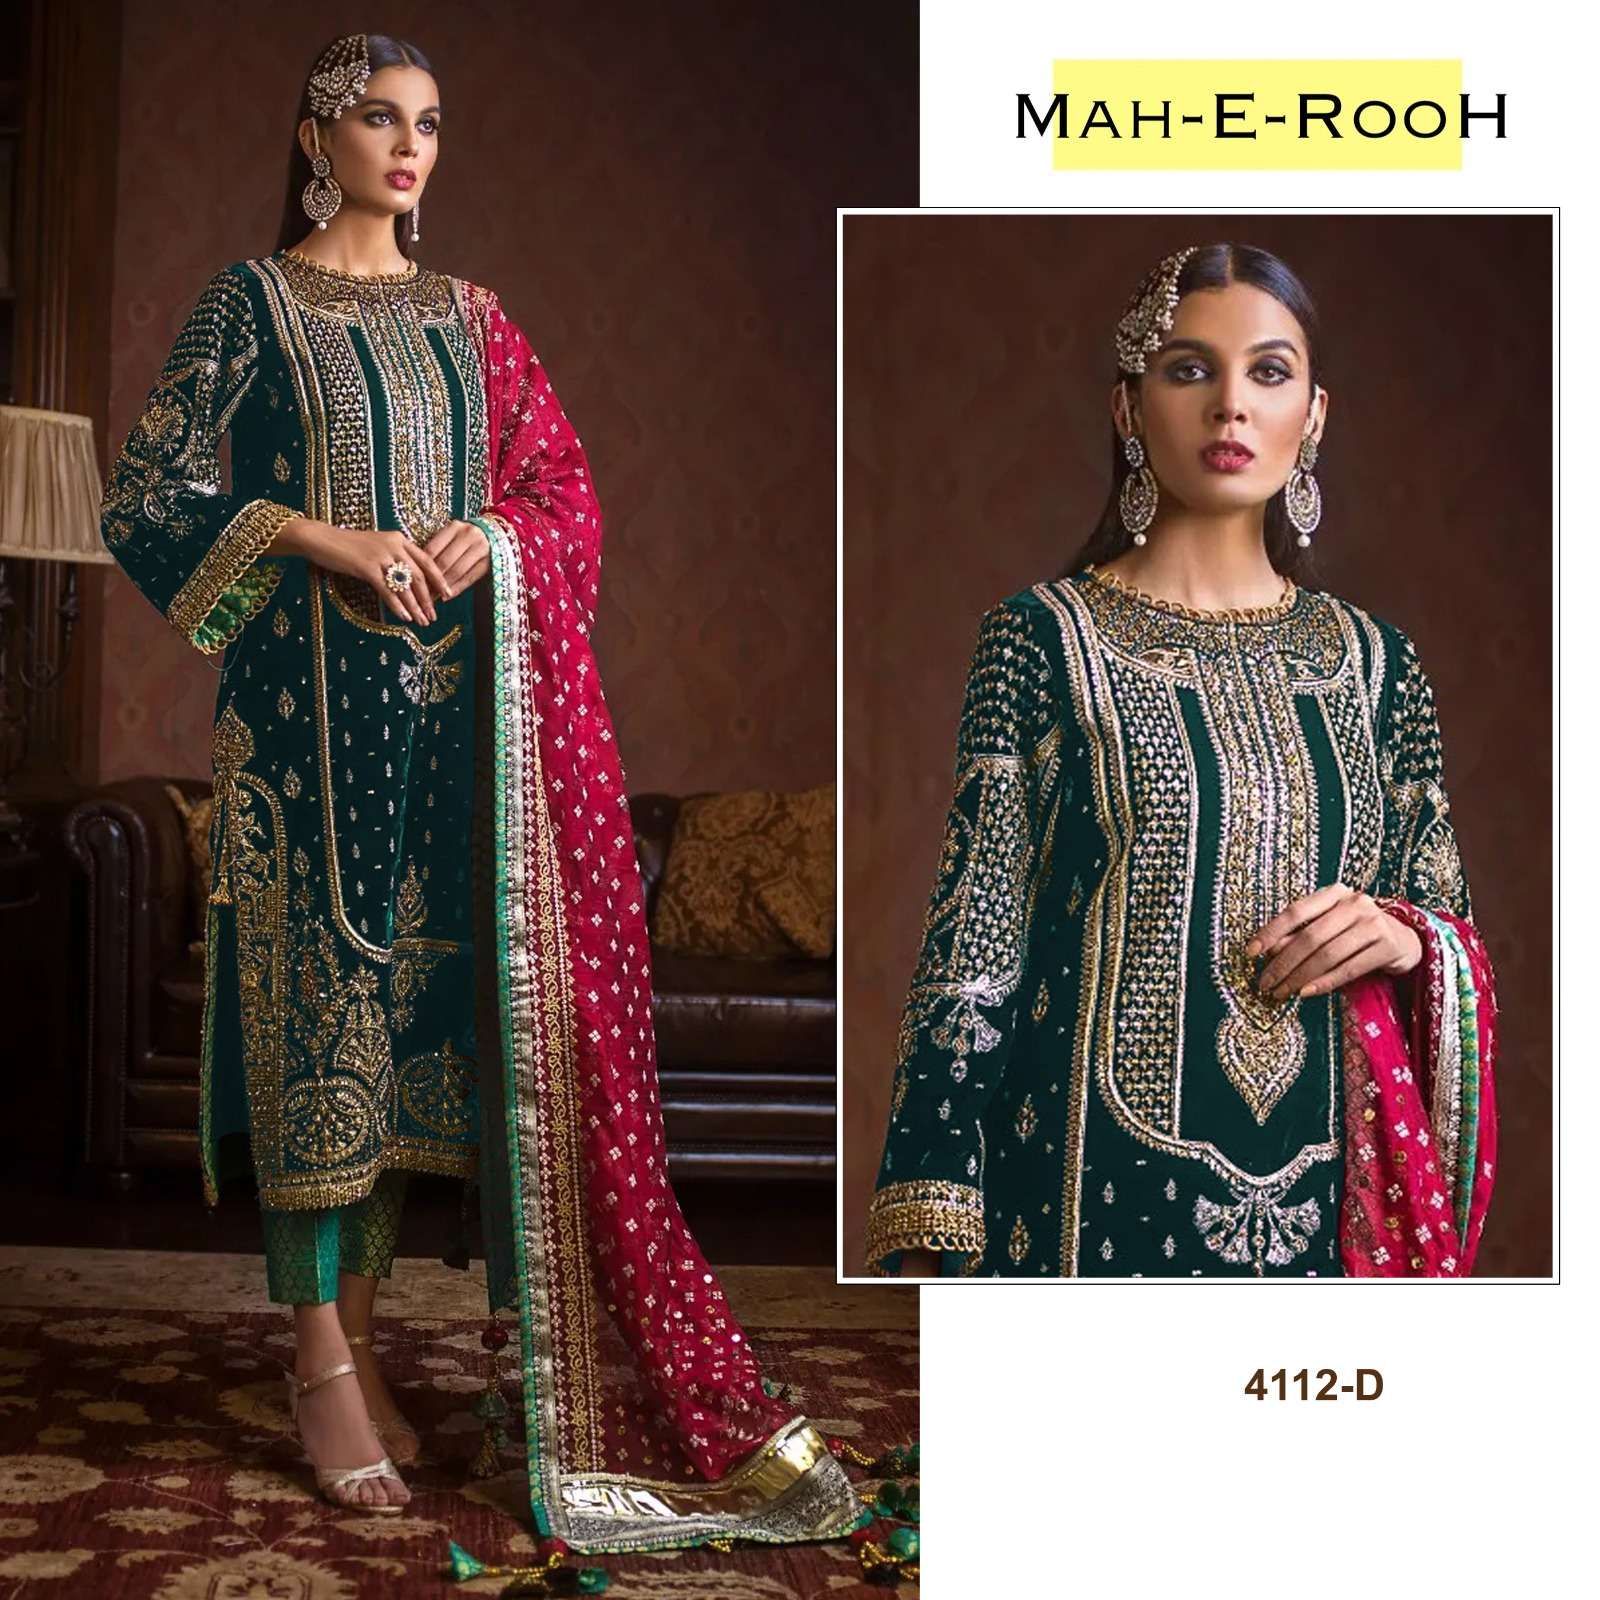 Mah E Rooh 4112 Velvet Pakistani Suit Wholesale catalog